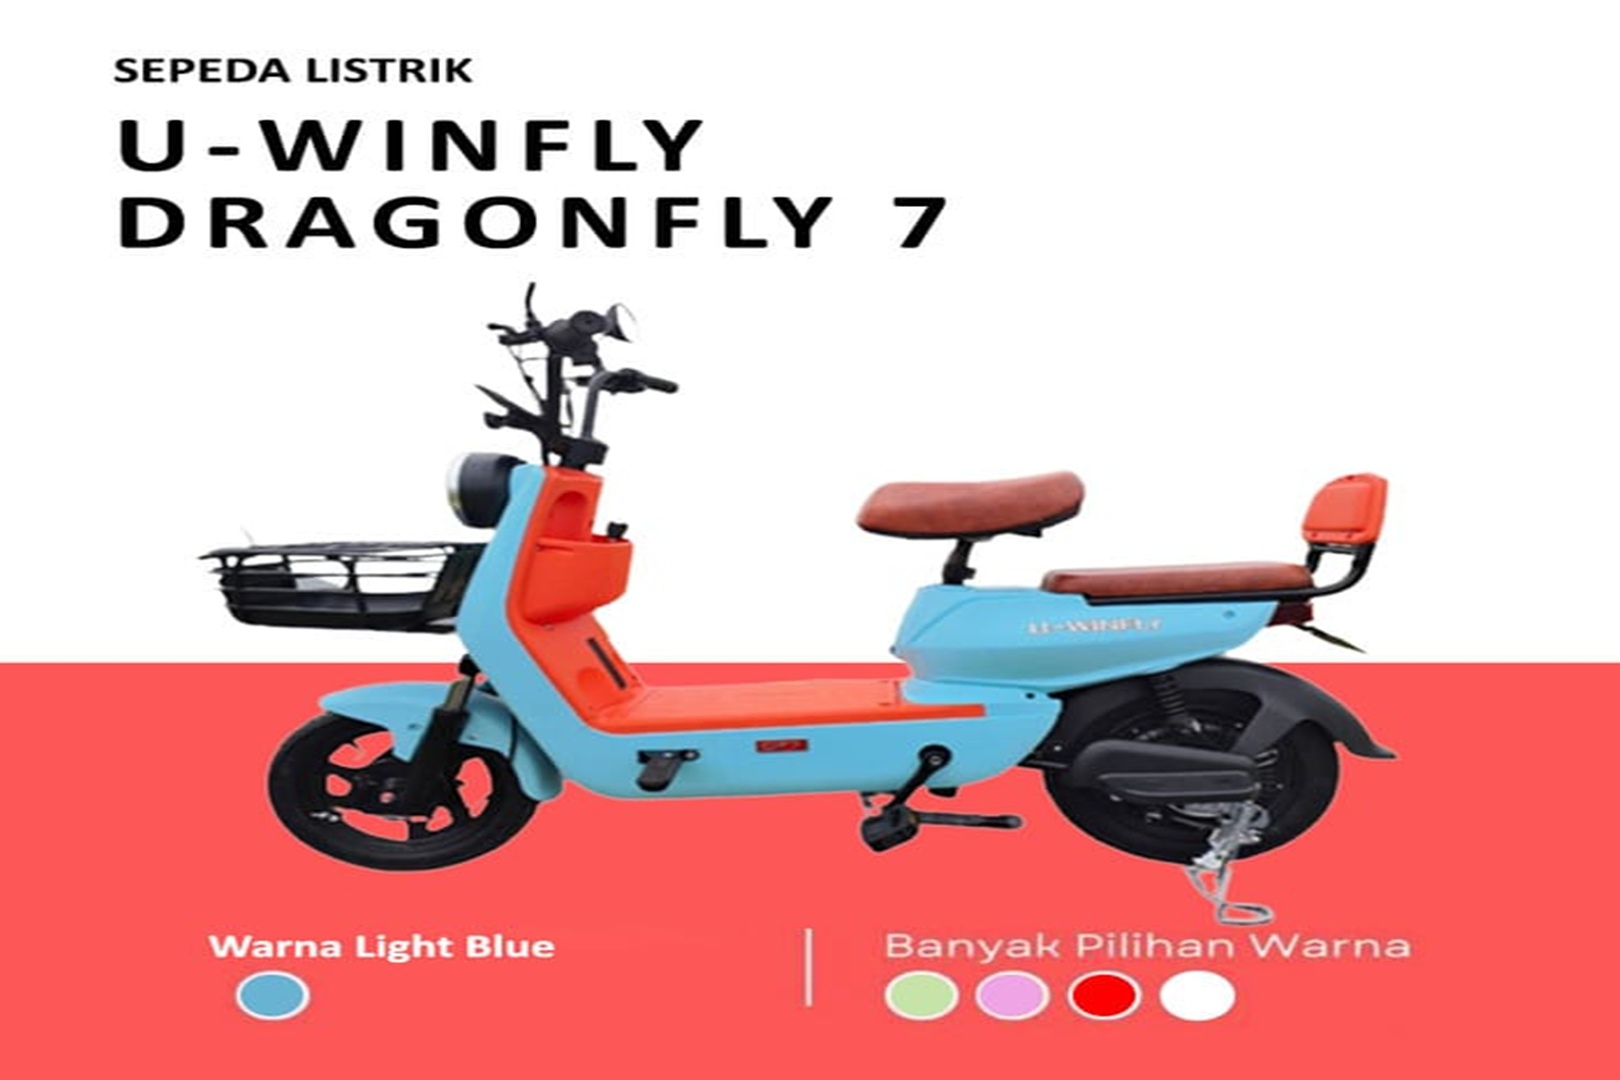 Yuk Review Sepeda Listrik Dragonfly 7, Sepeda Listrik Terbaru Keluaran Uwinfly